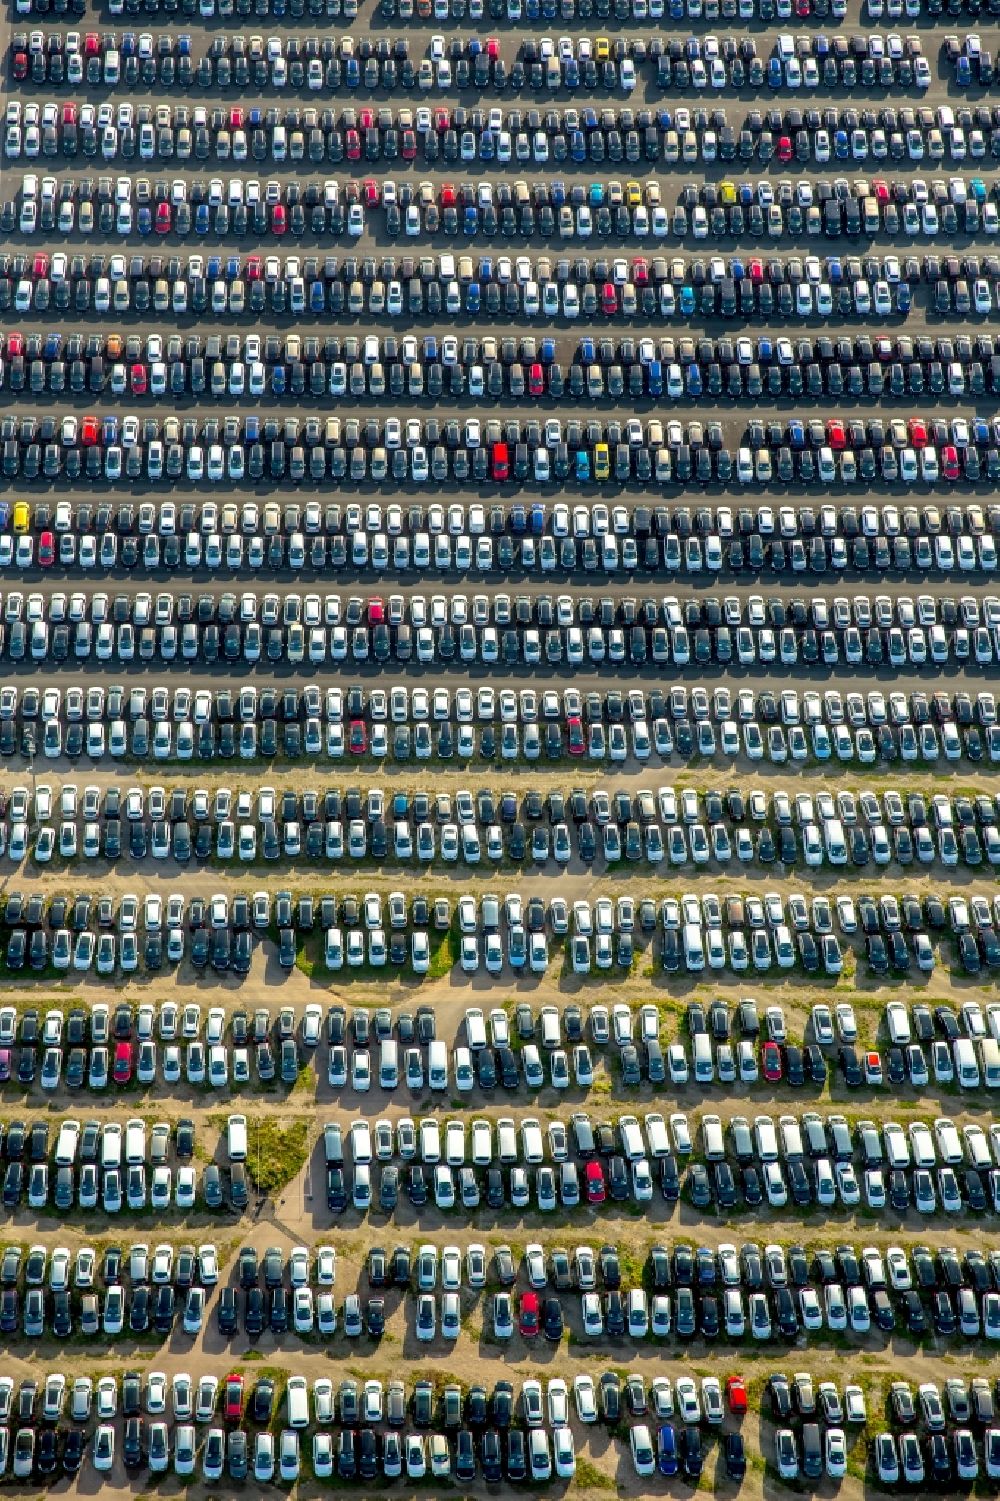 Aerial photograph Zülpich - Parking and storage space for automobiles in Zuelpich in the state North Rhine-Westphalia